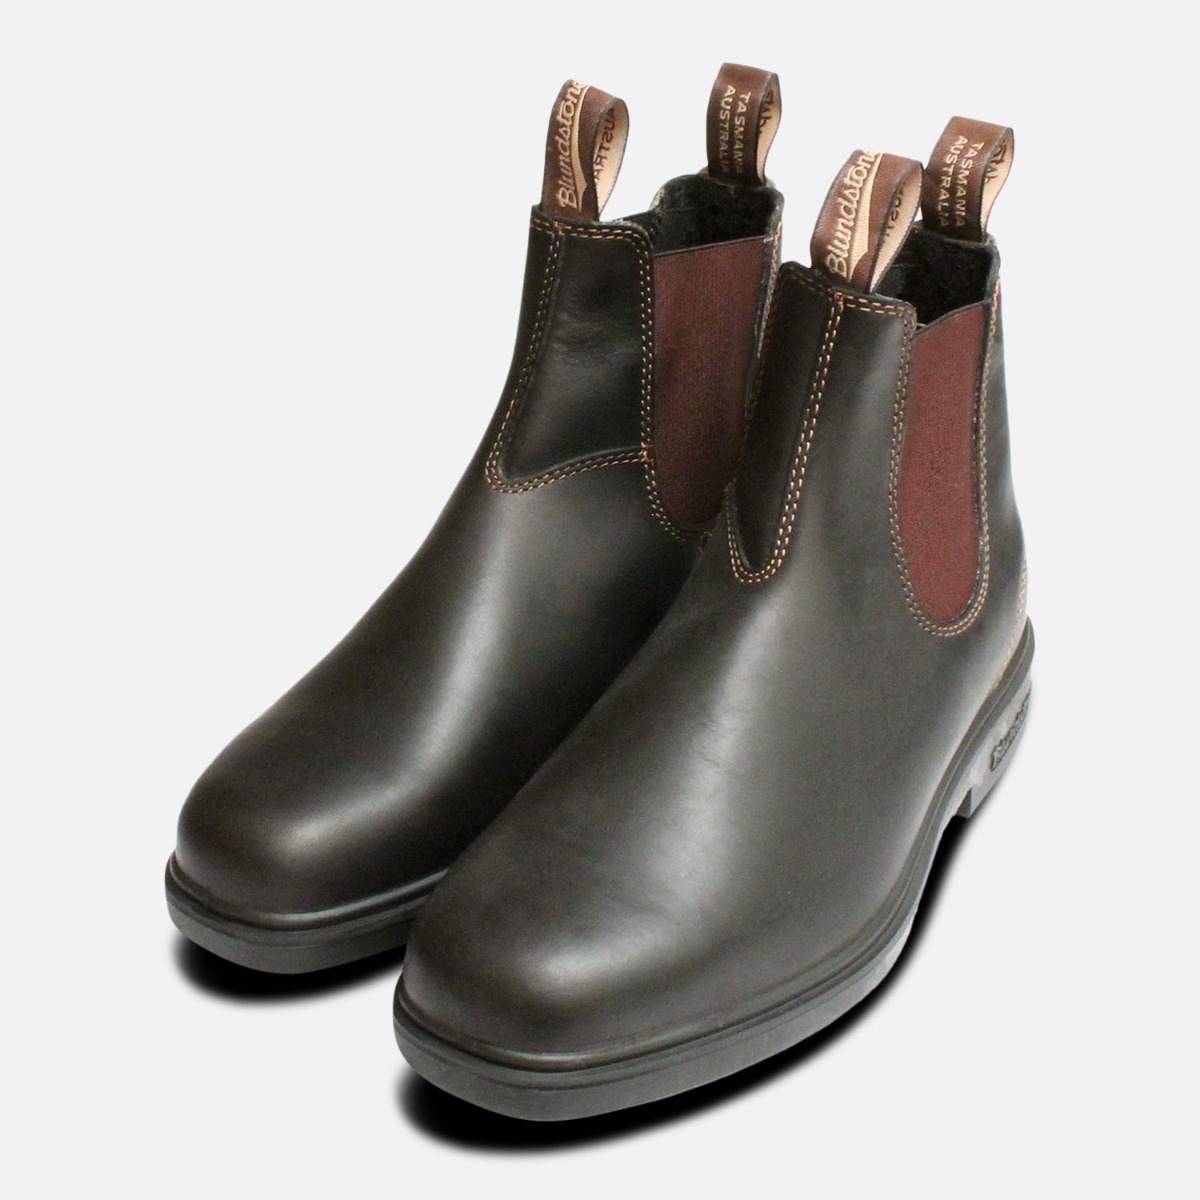 blundstone boot polish stout brown